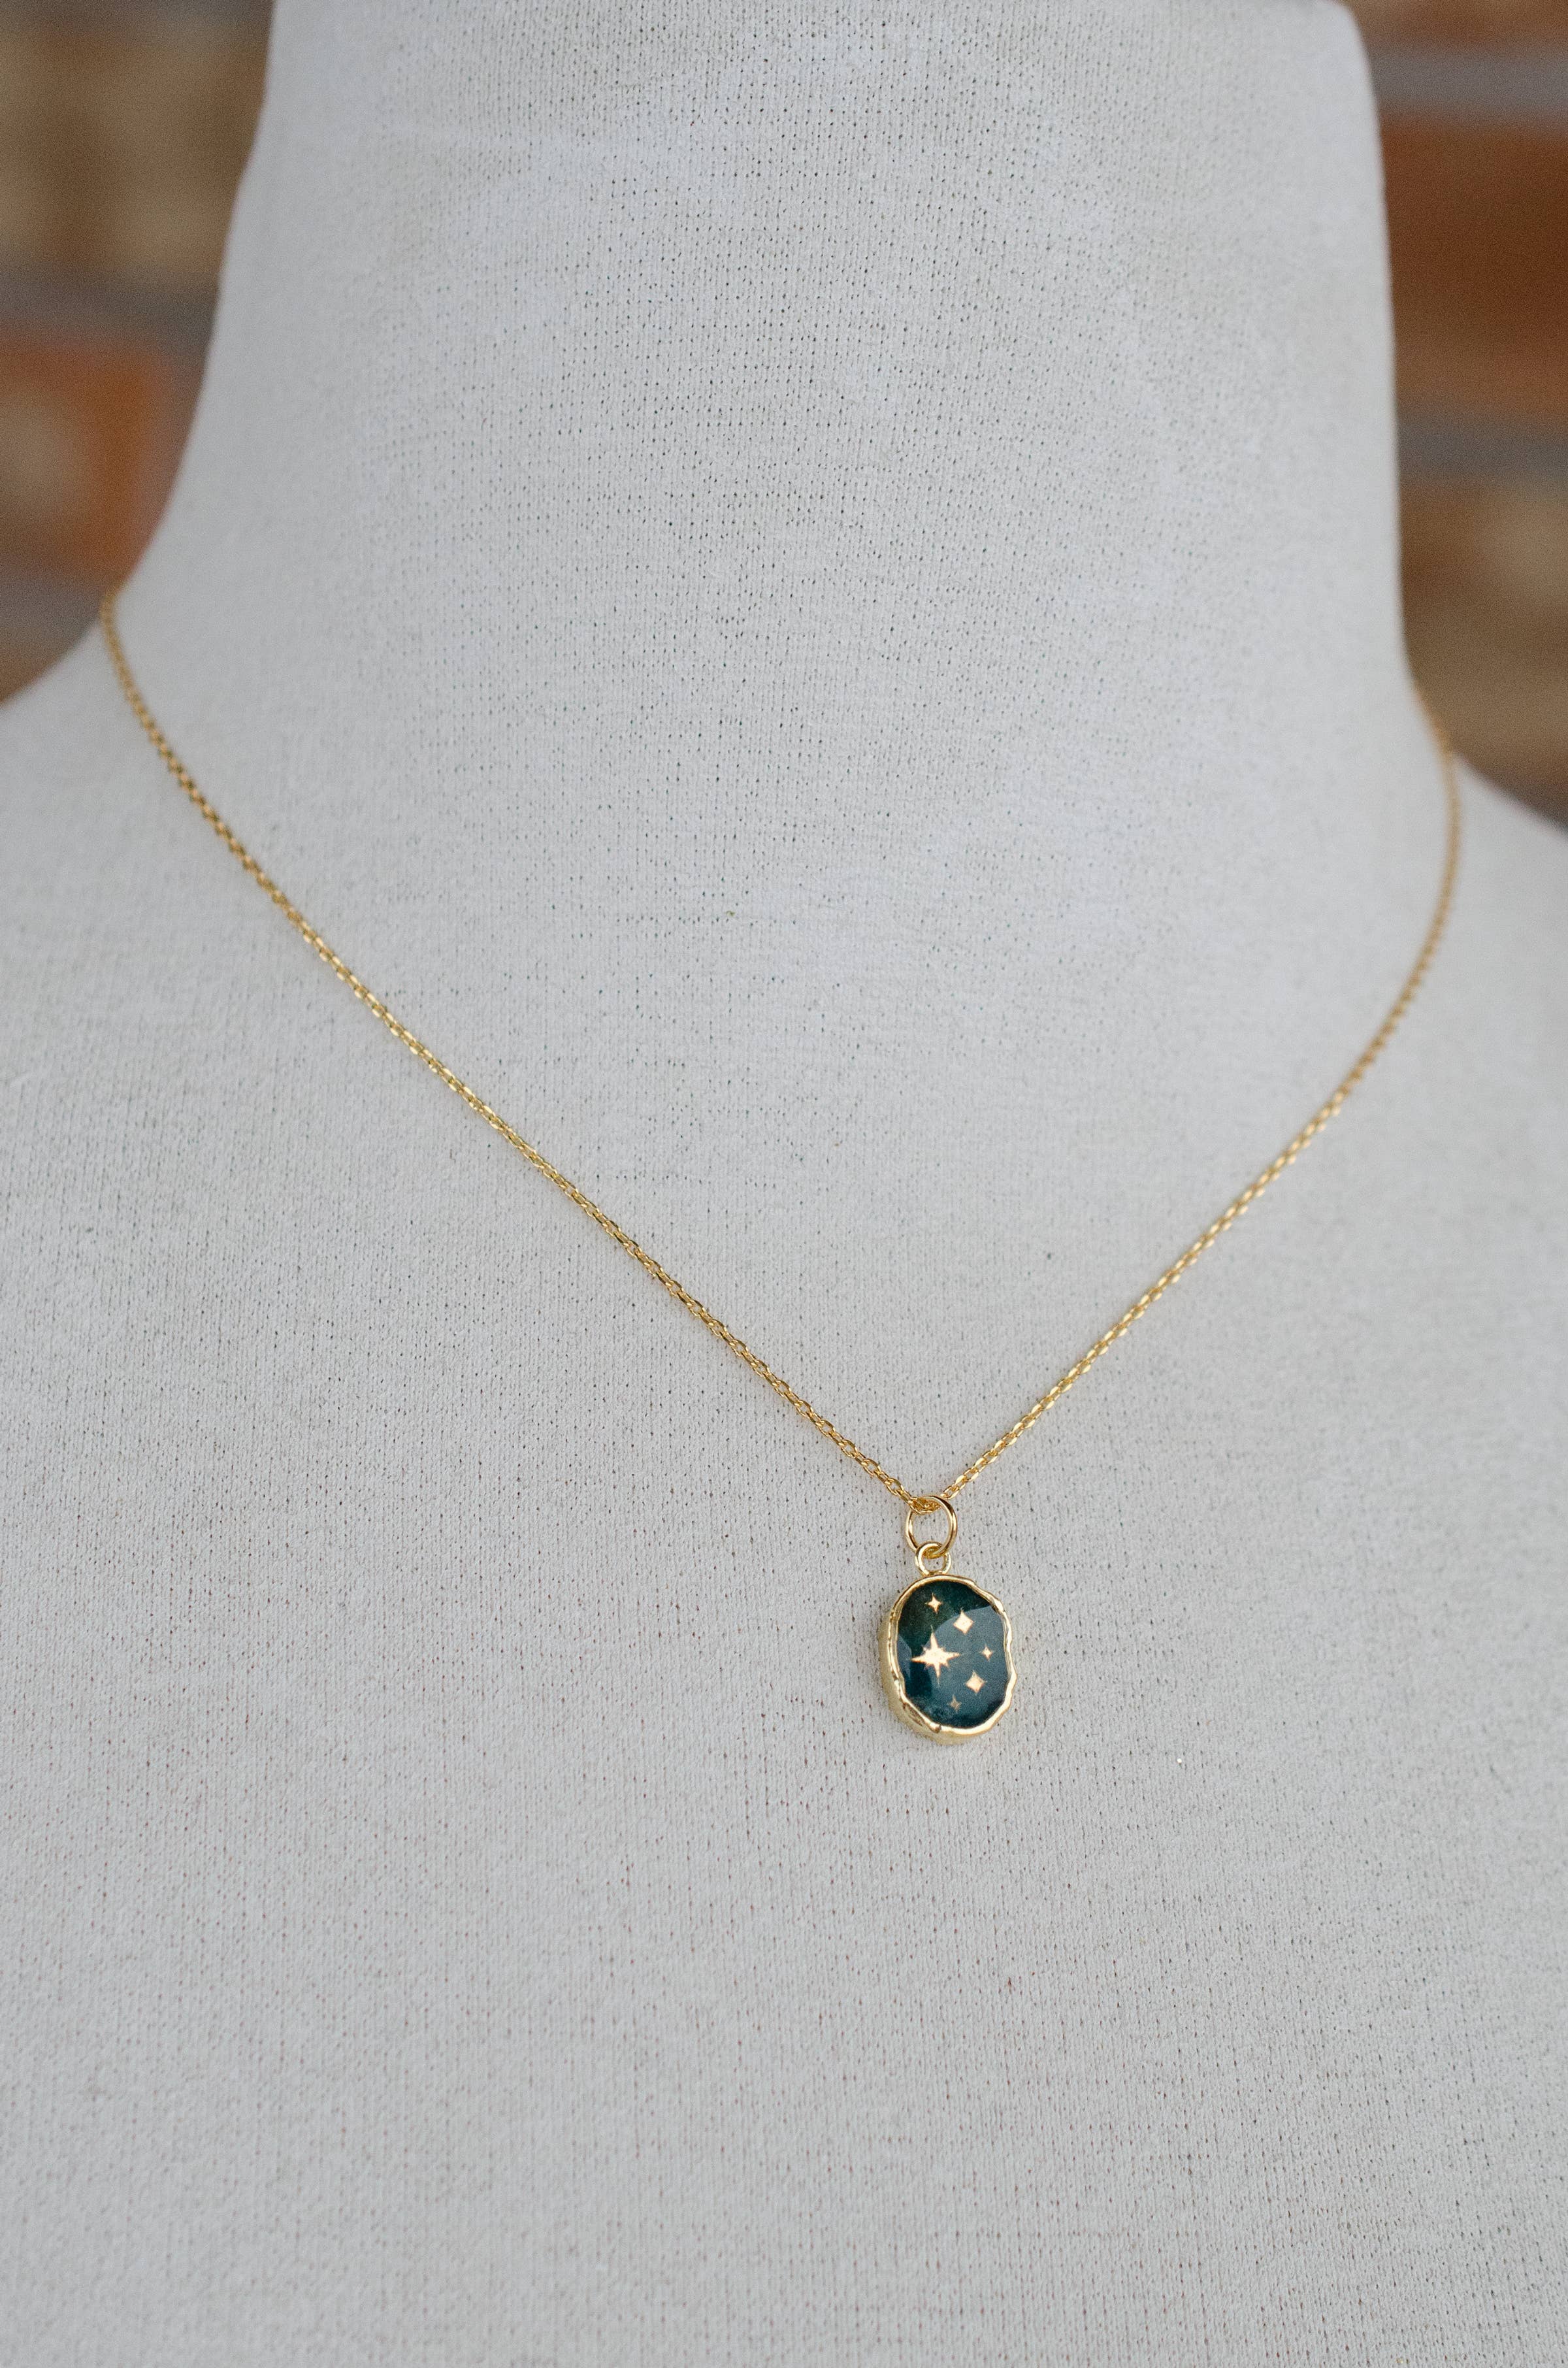 Celestial Gemstone Pendant Necklace